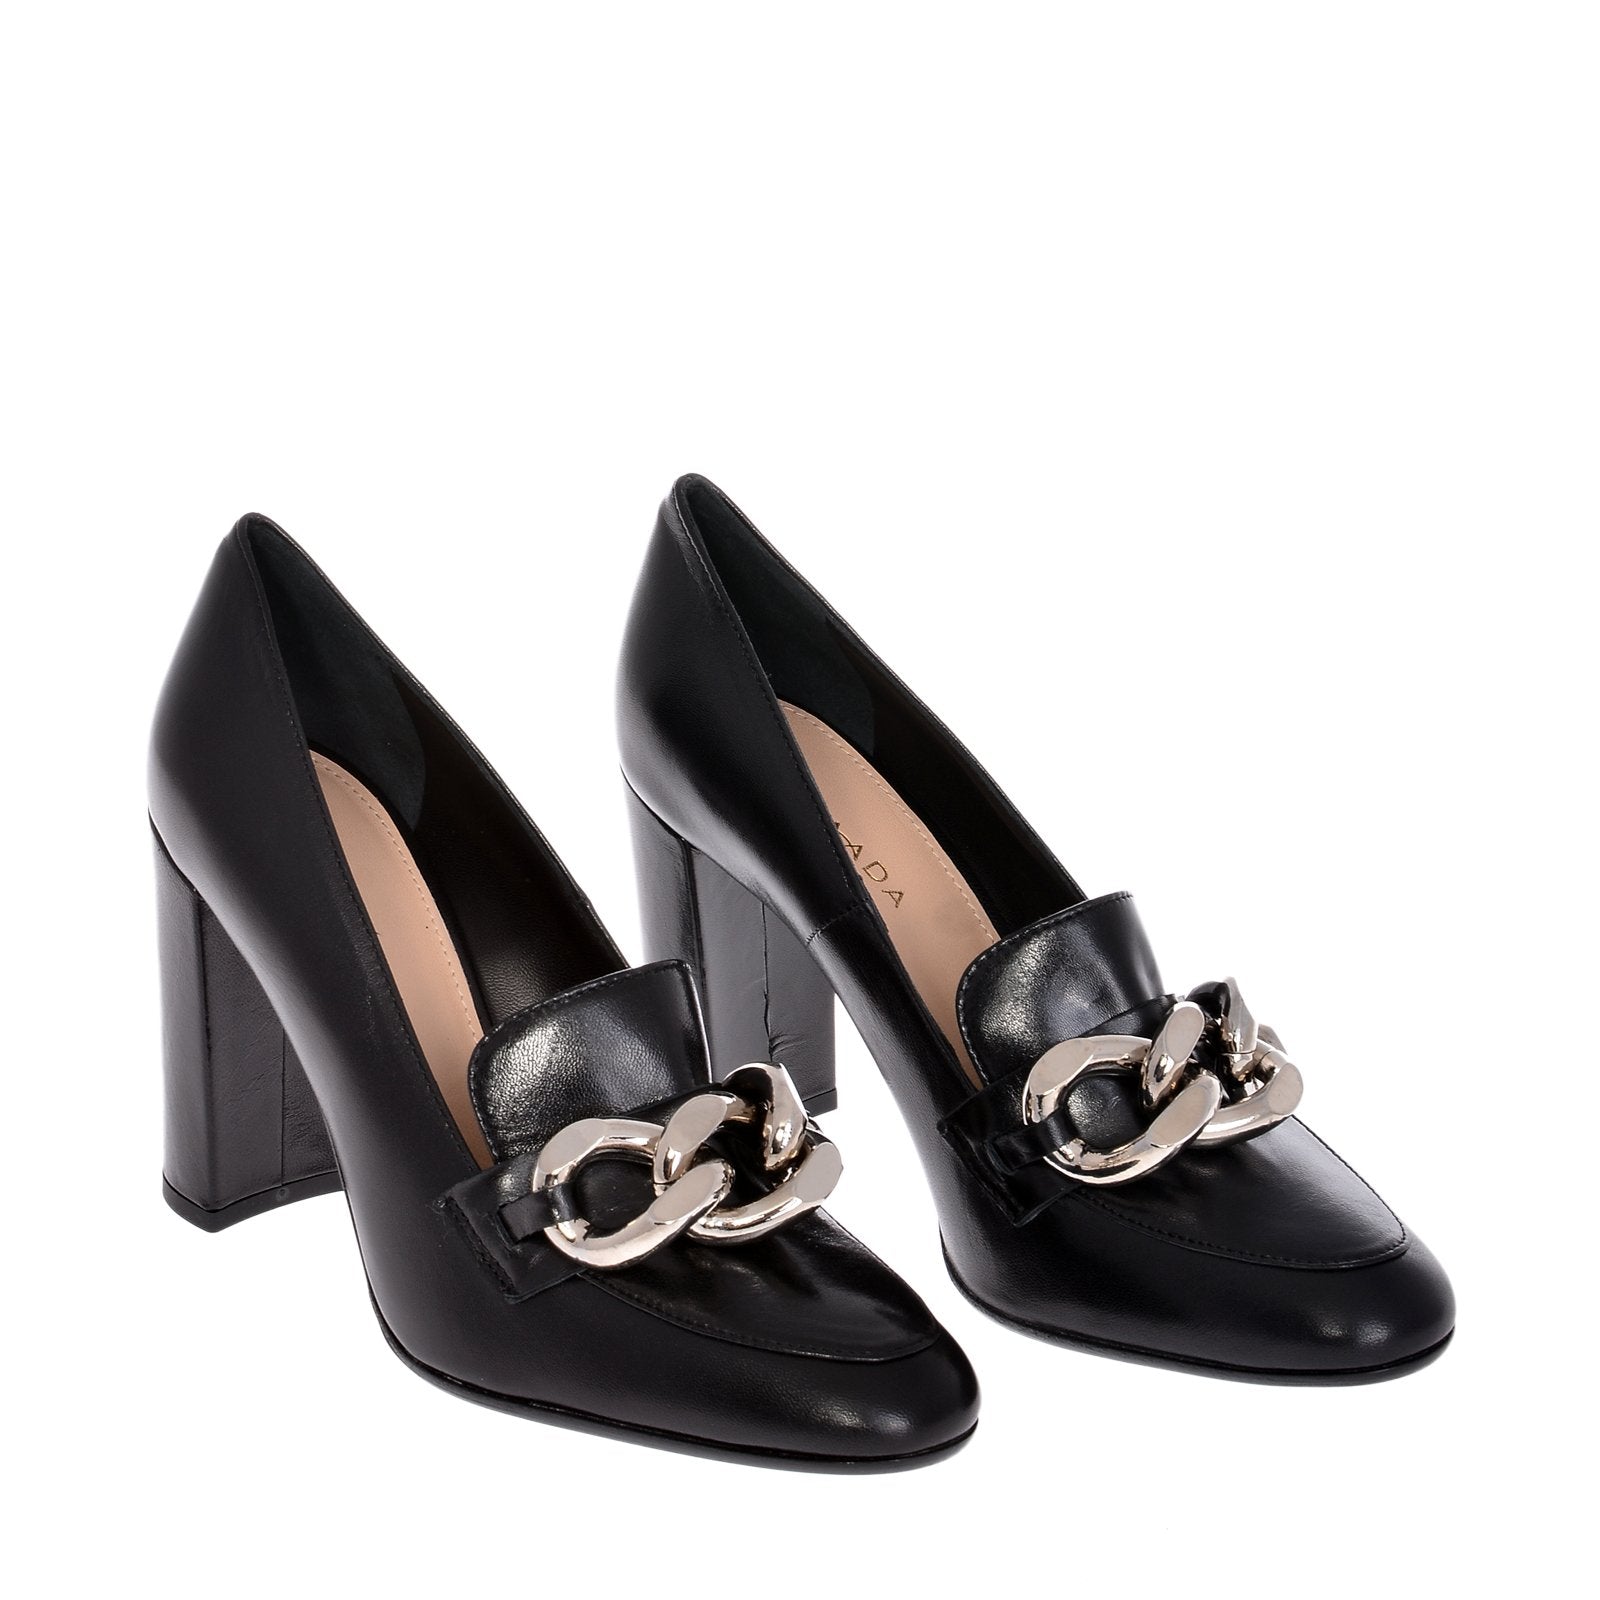 Mai Black Leather Shoes Heels 1240_NERO - 3